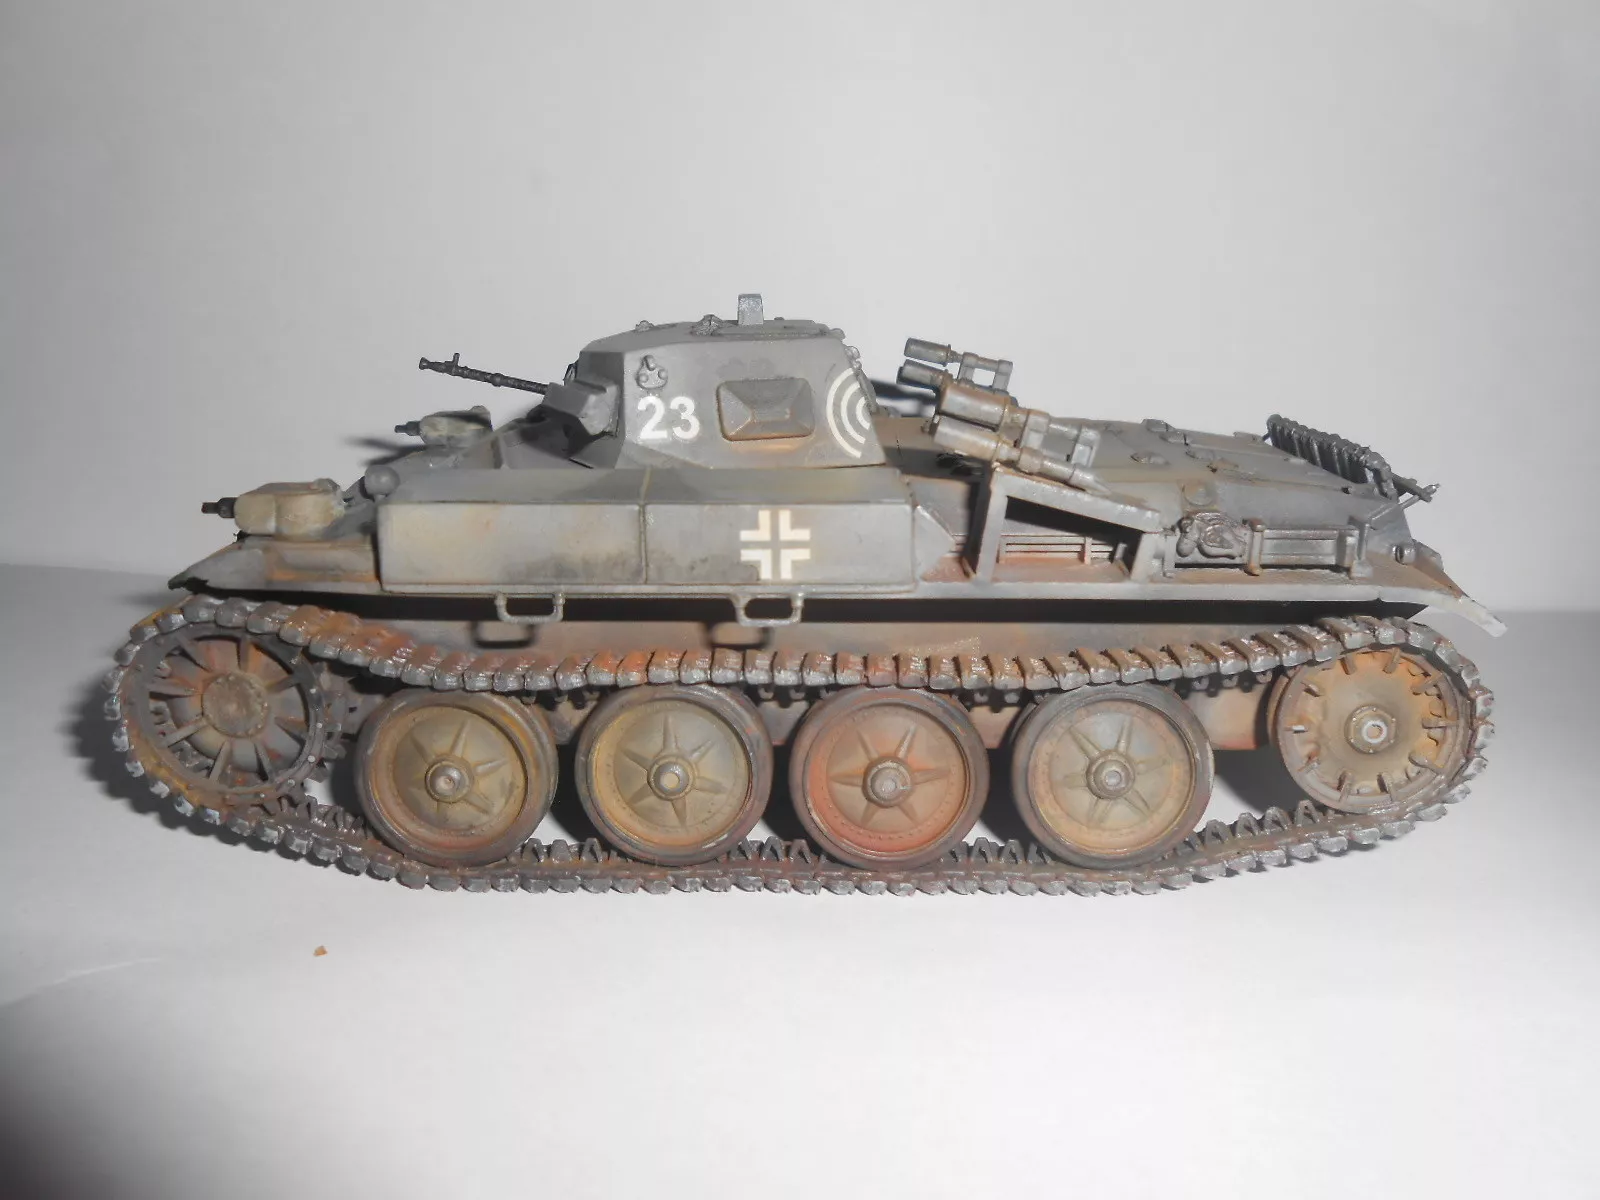 Немецкий огнемётный танк ТII «Фламинго»